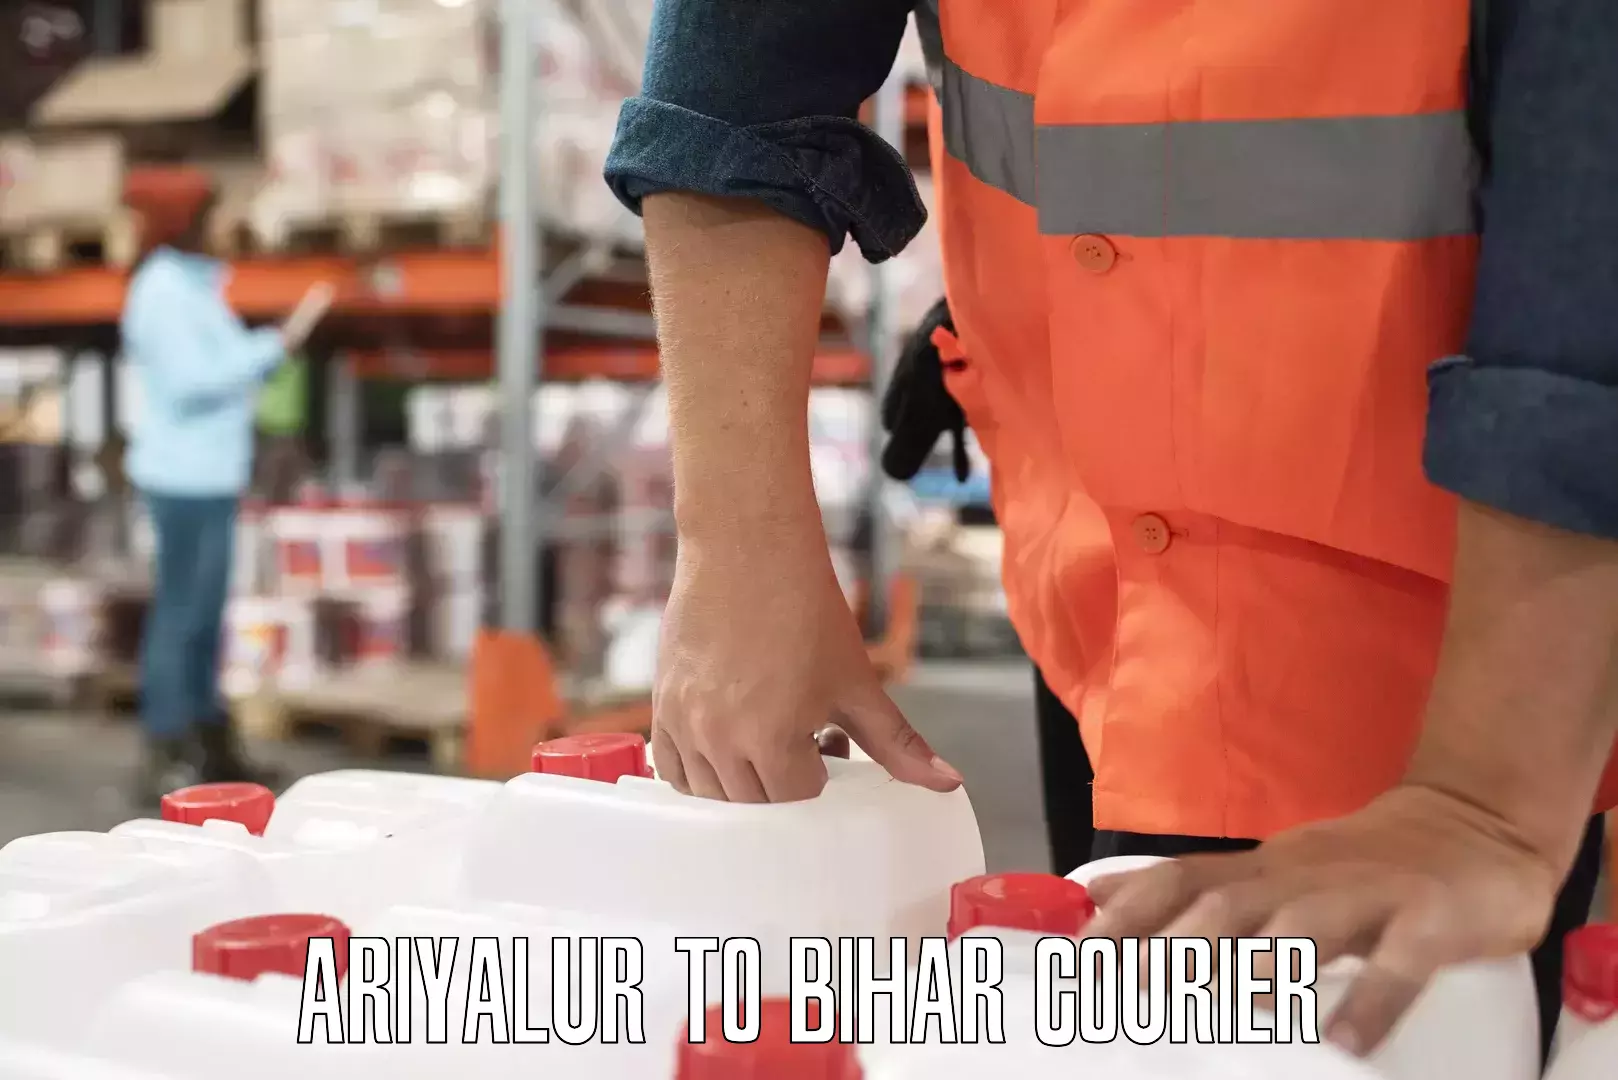 Courier service comparison Ariyalur to Bihar